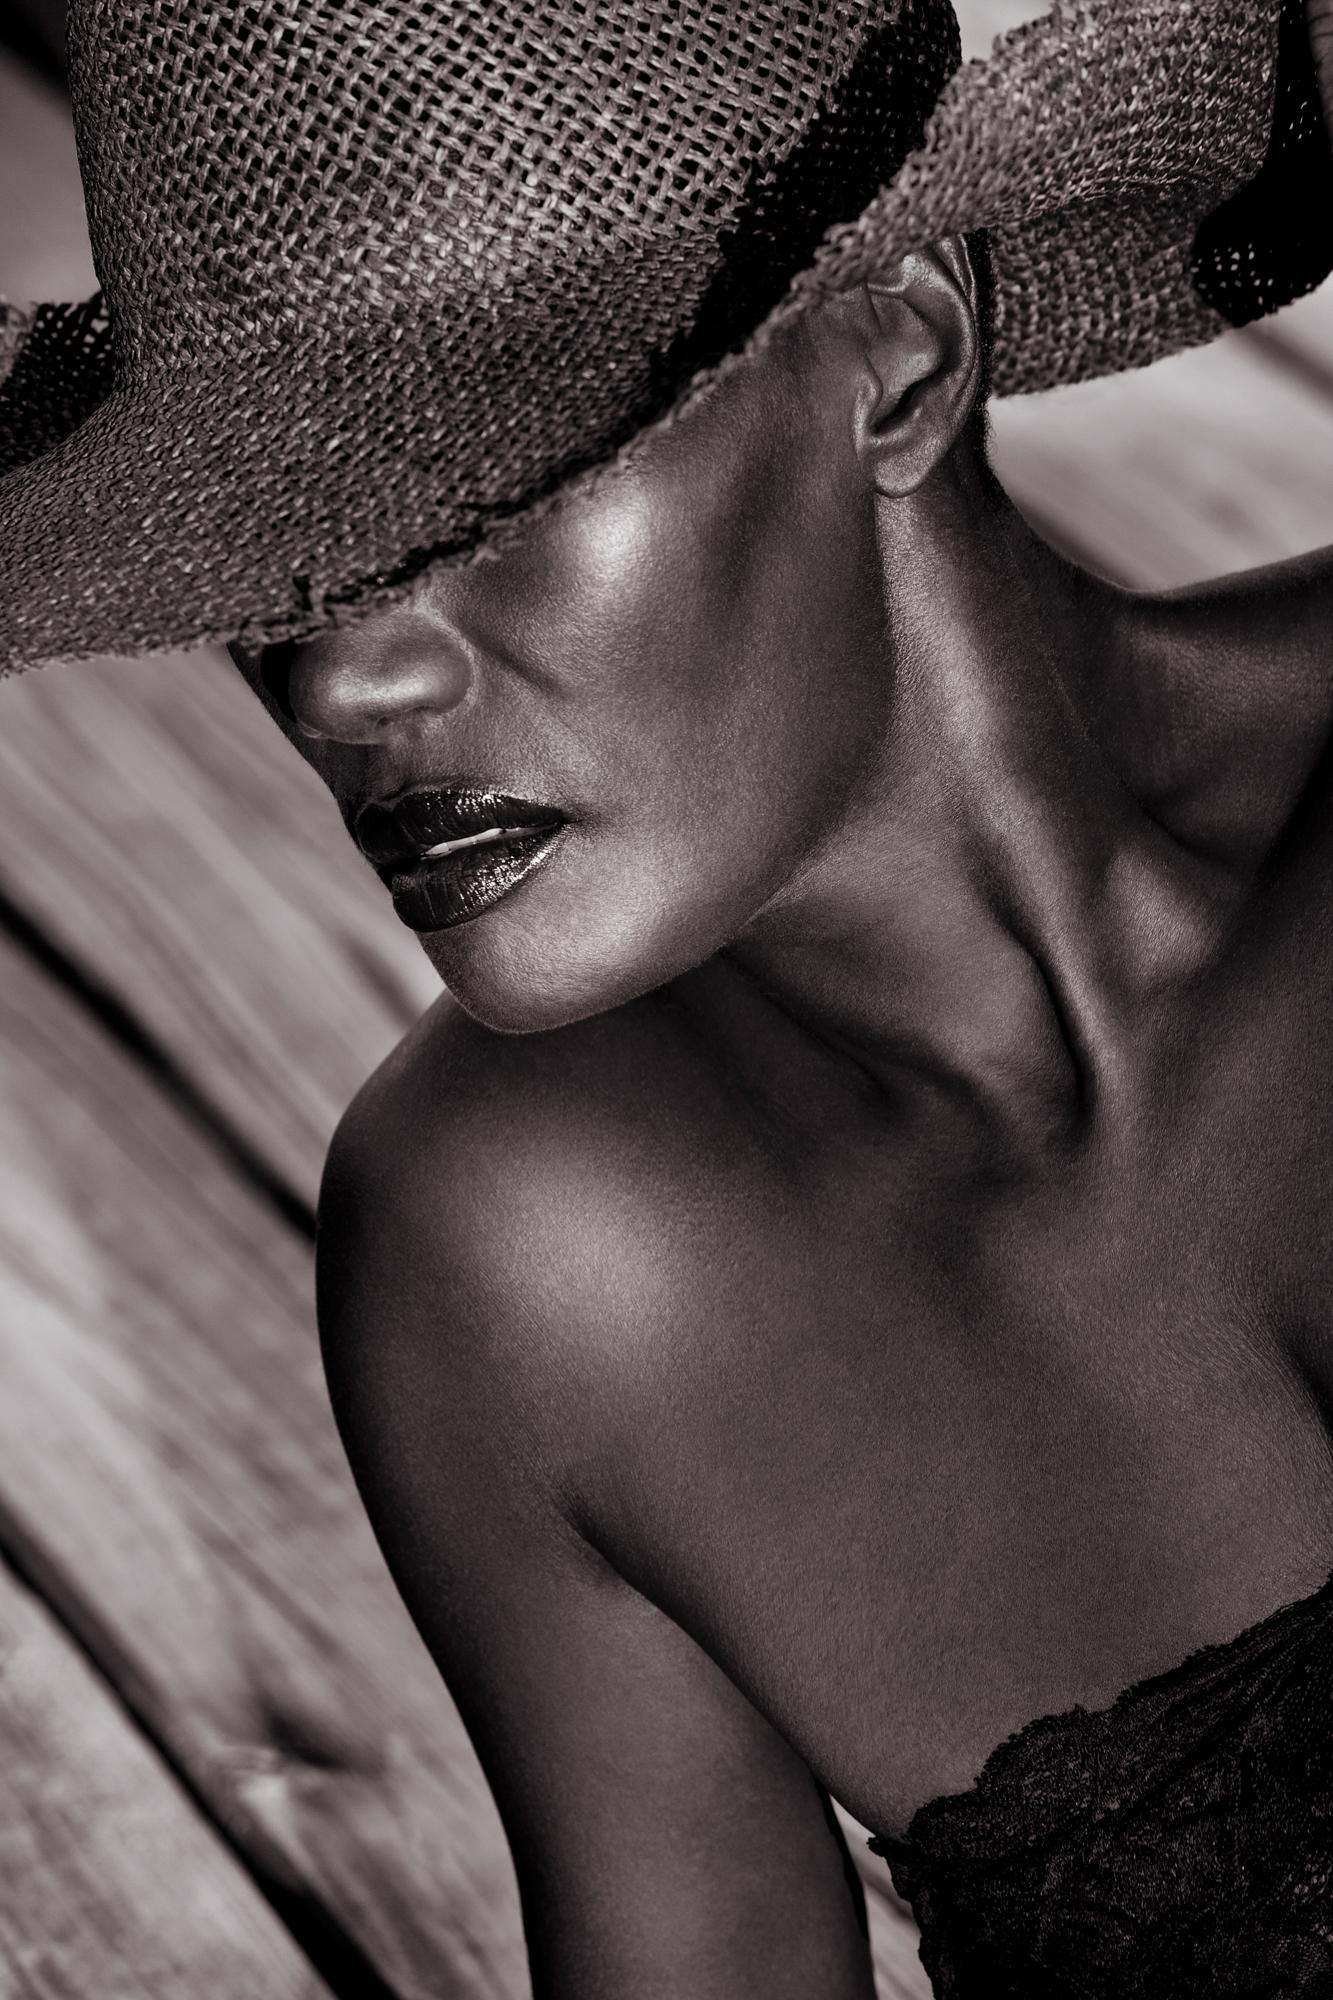 Grace Jones with Cowboy hat, 21st Century, Contemporary, Celebrity, Photography